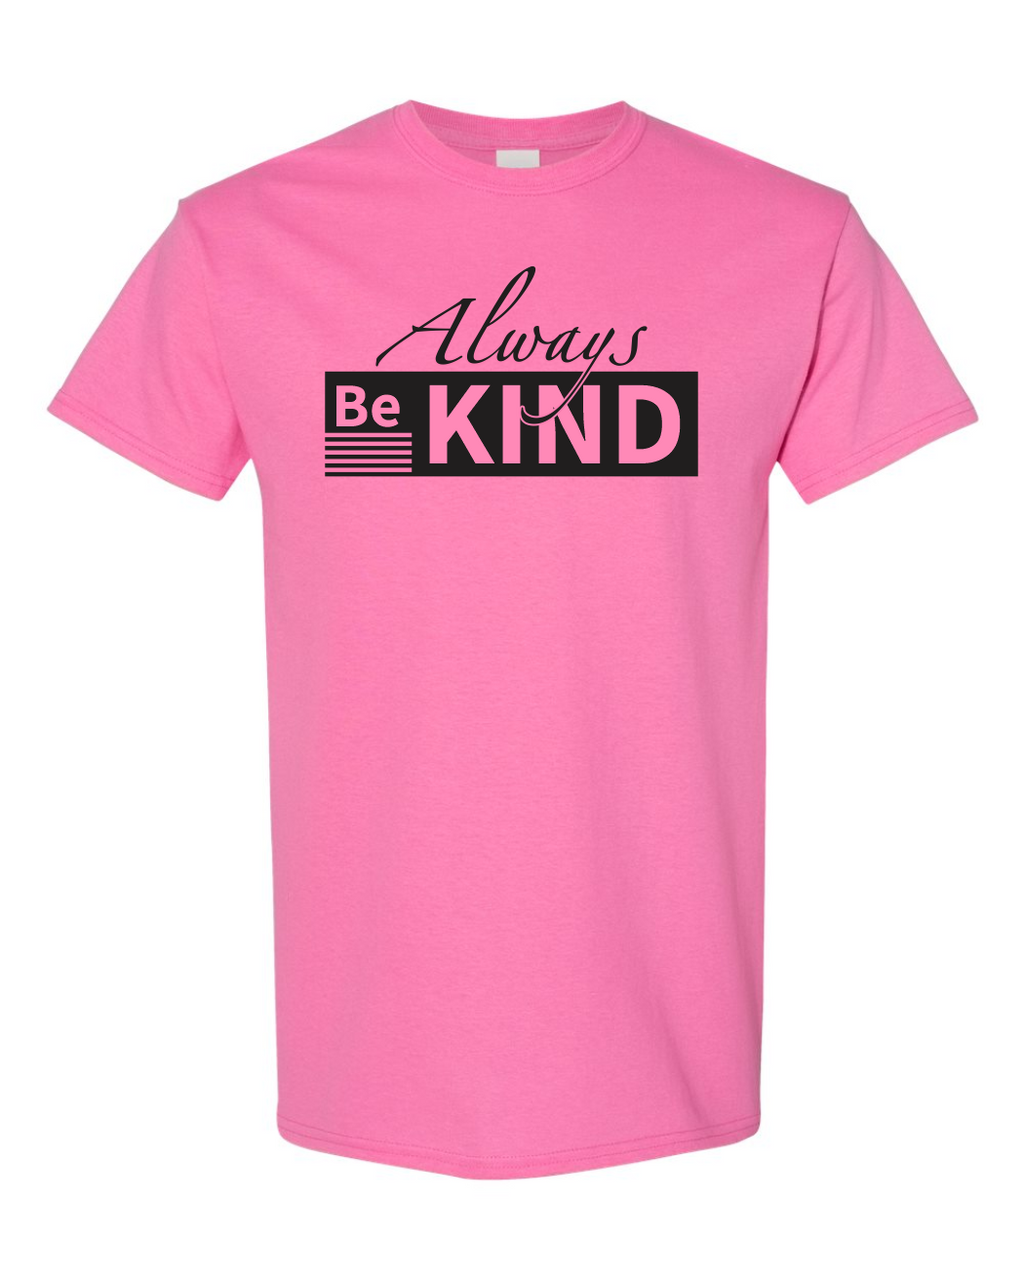 Be Kind Shirt - Always Be Kind